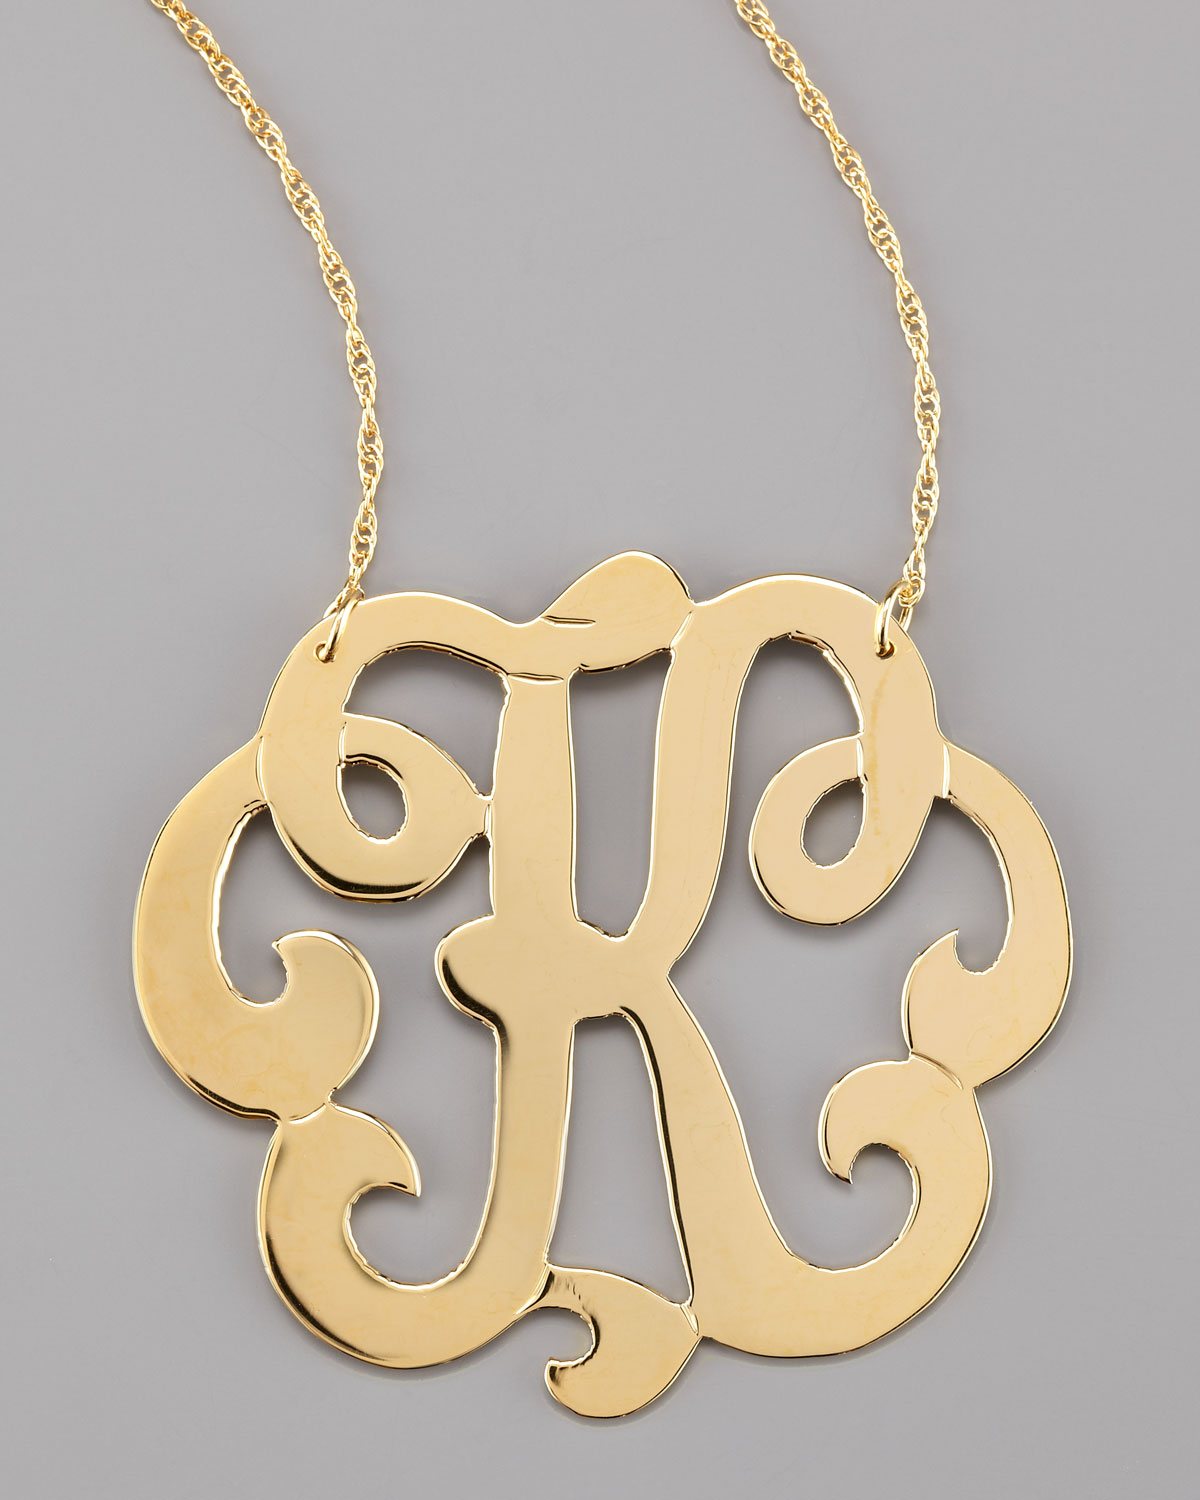 Lyst - Jennifer Zeuner Swirly Initial Necklace in Metallic